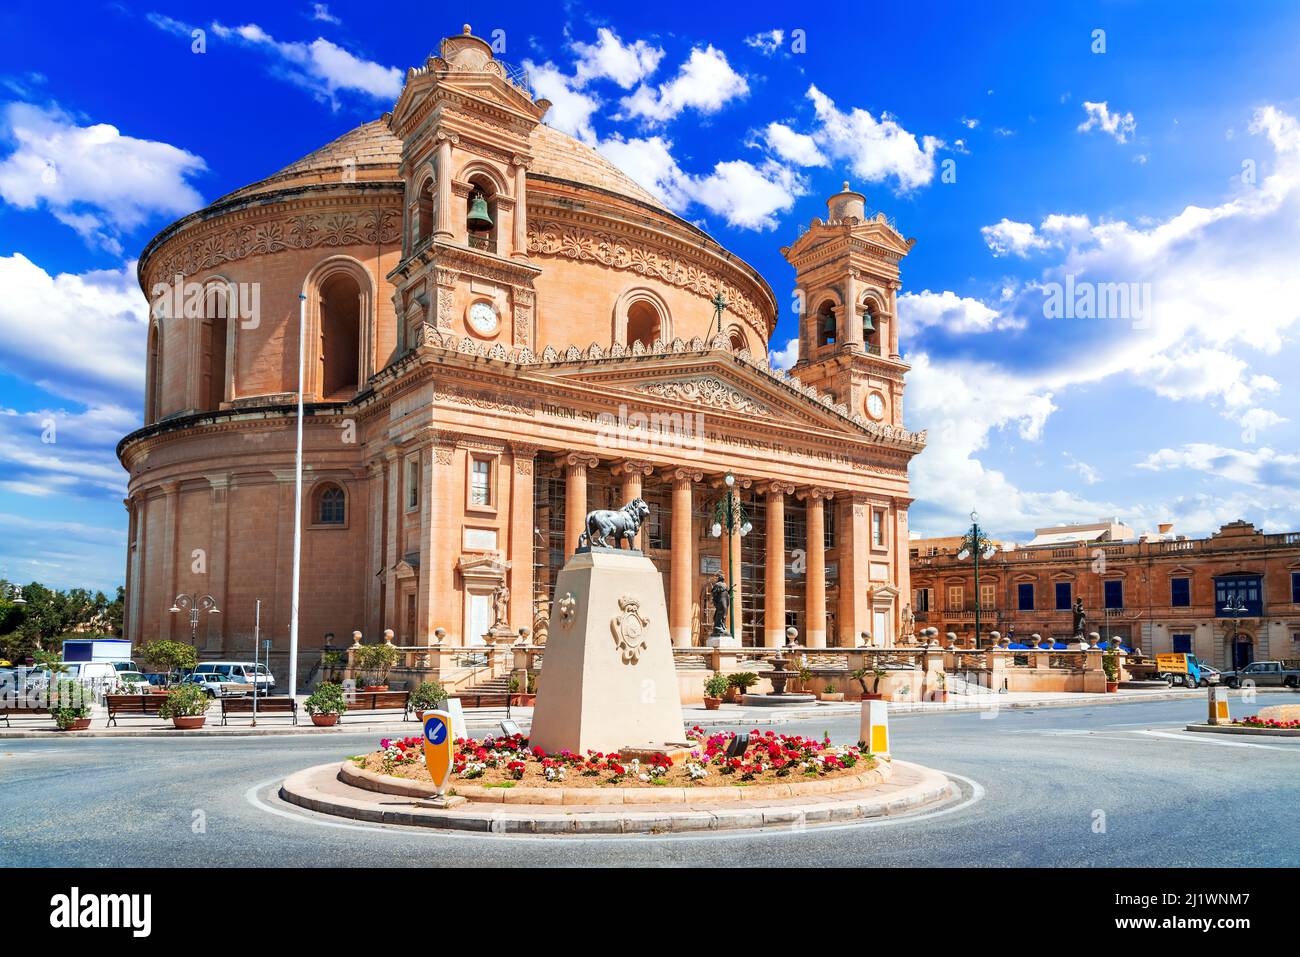 Mosta, Malta. Chiesa Santa Marija Assunta o Rotunda Mosta, architettura neoclassica basata sul Pantheon di Roma. Foto Stock